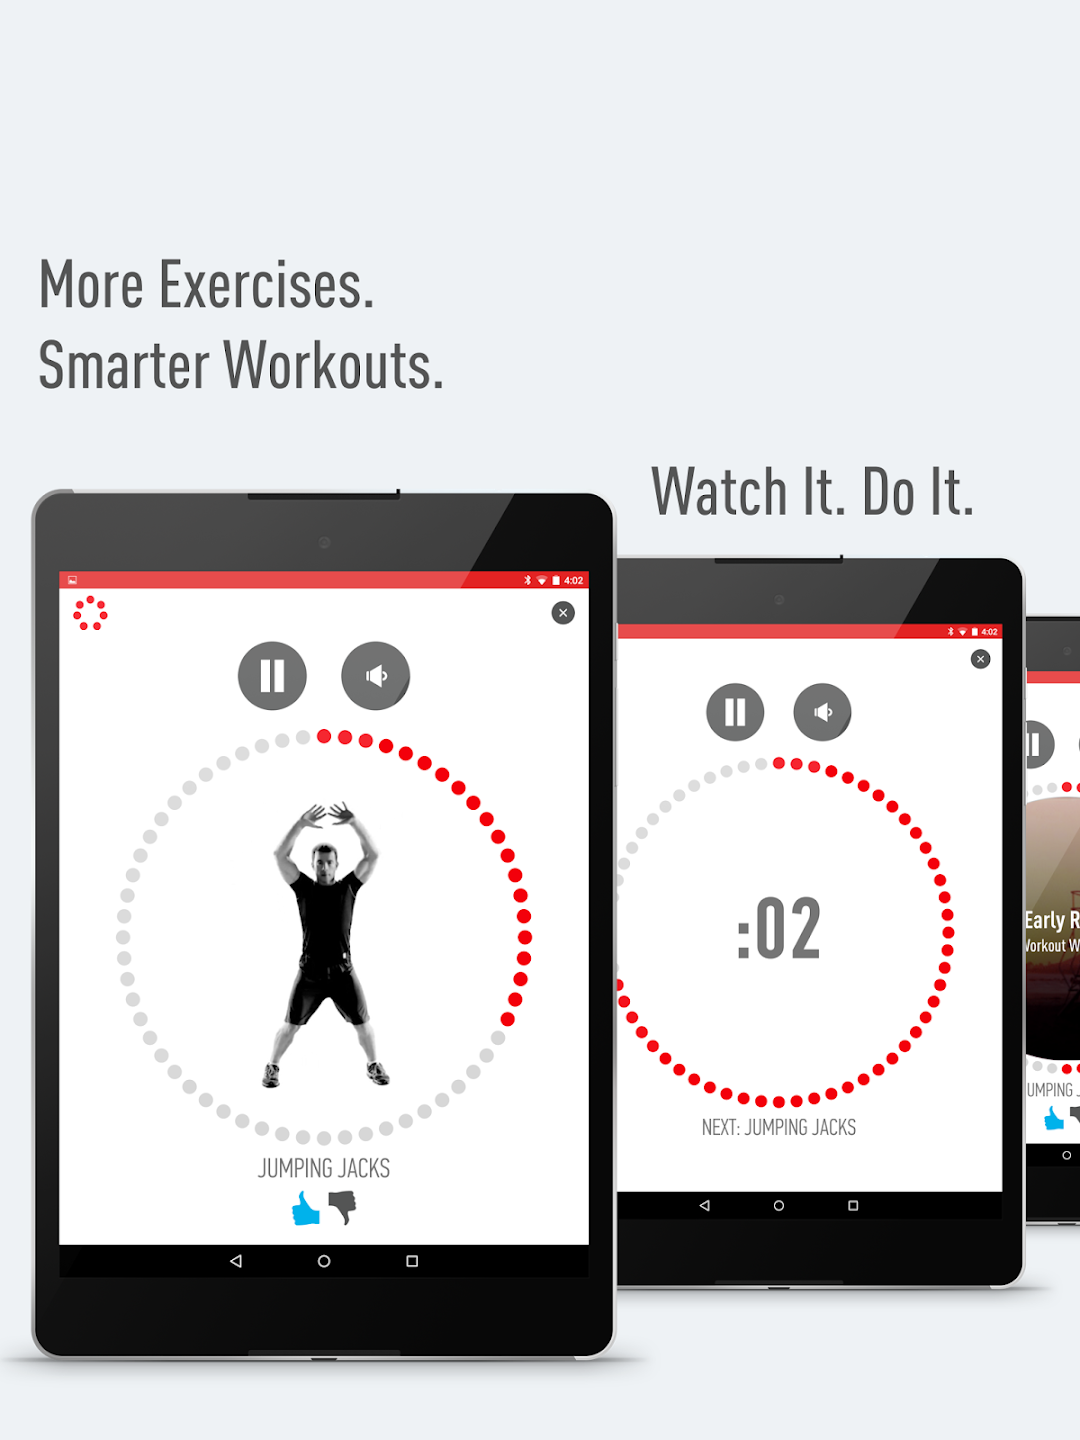 J&J’s 7 Minute Workout app - hospital marketing gamification